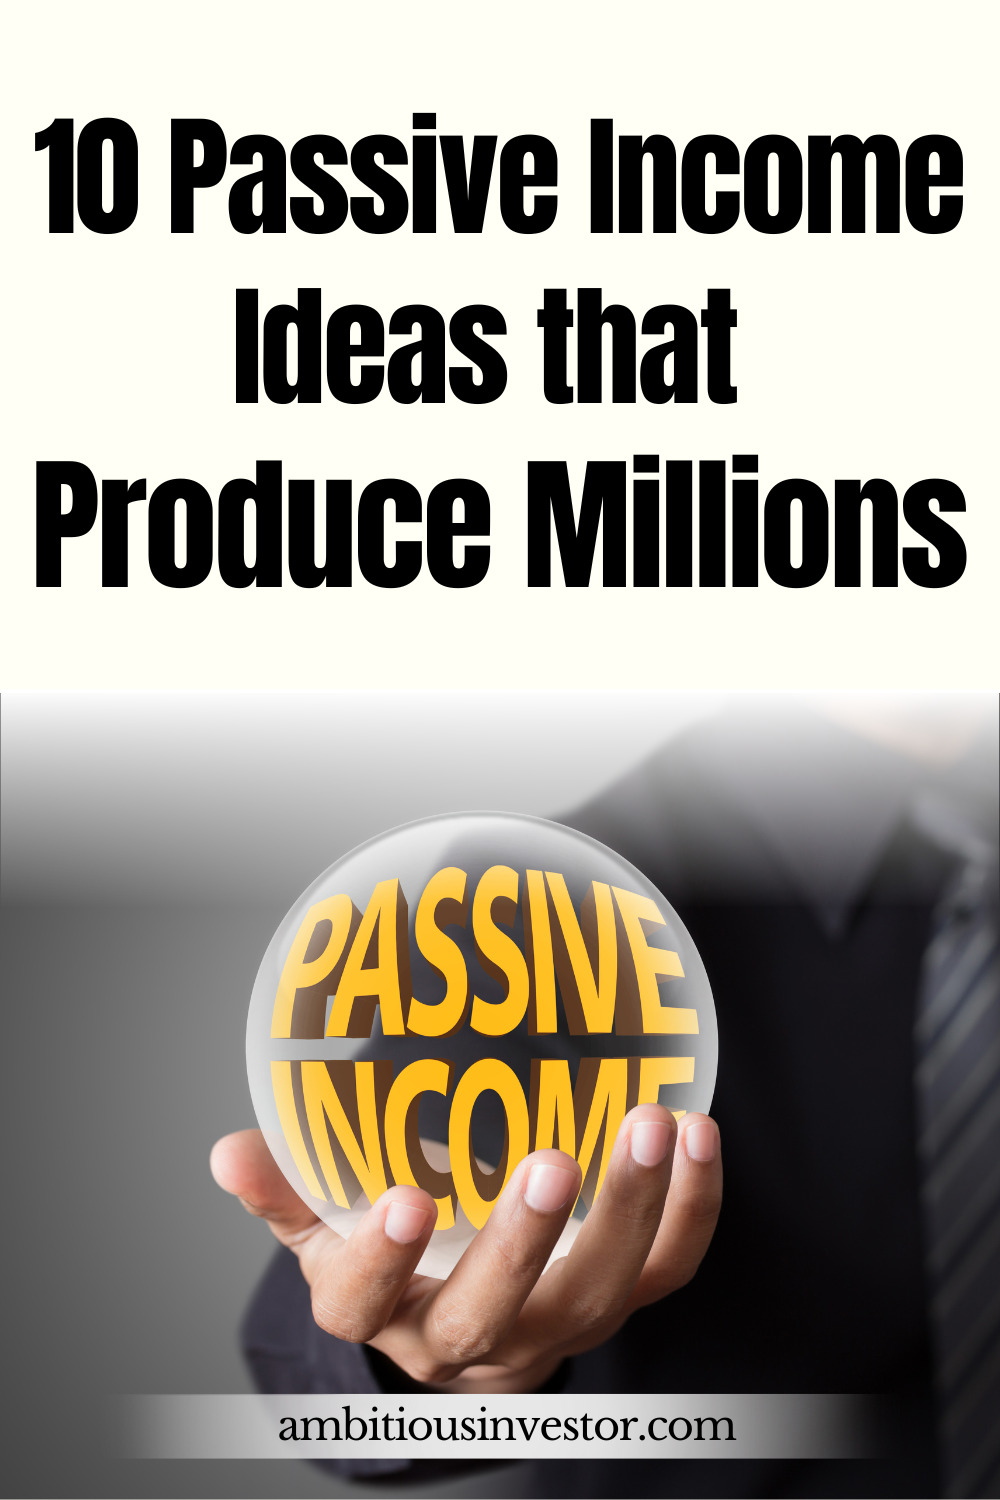 10 Passive Income Ideas that Produce Millions